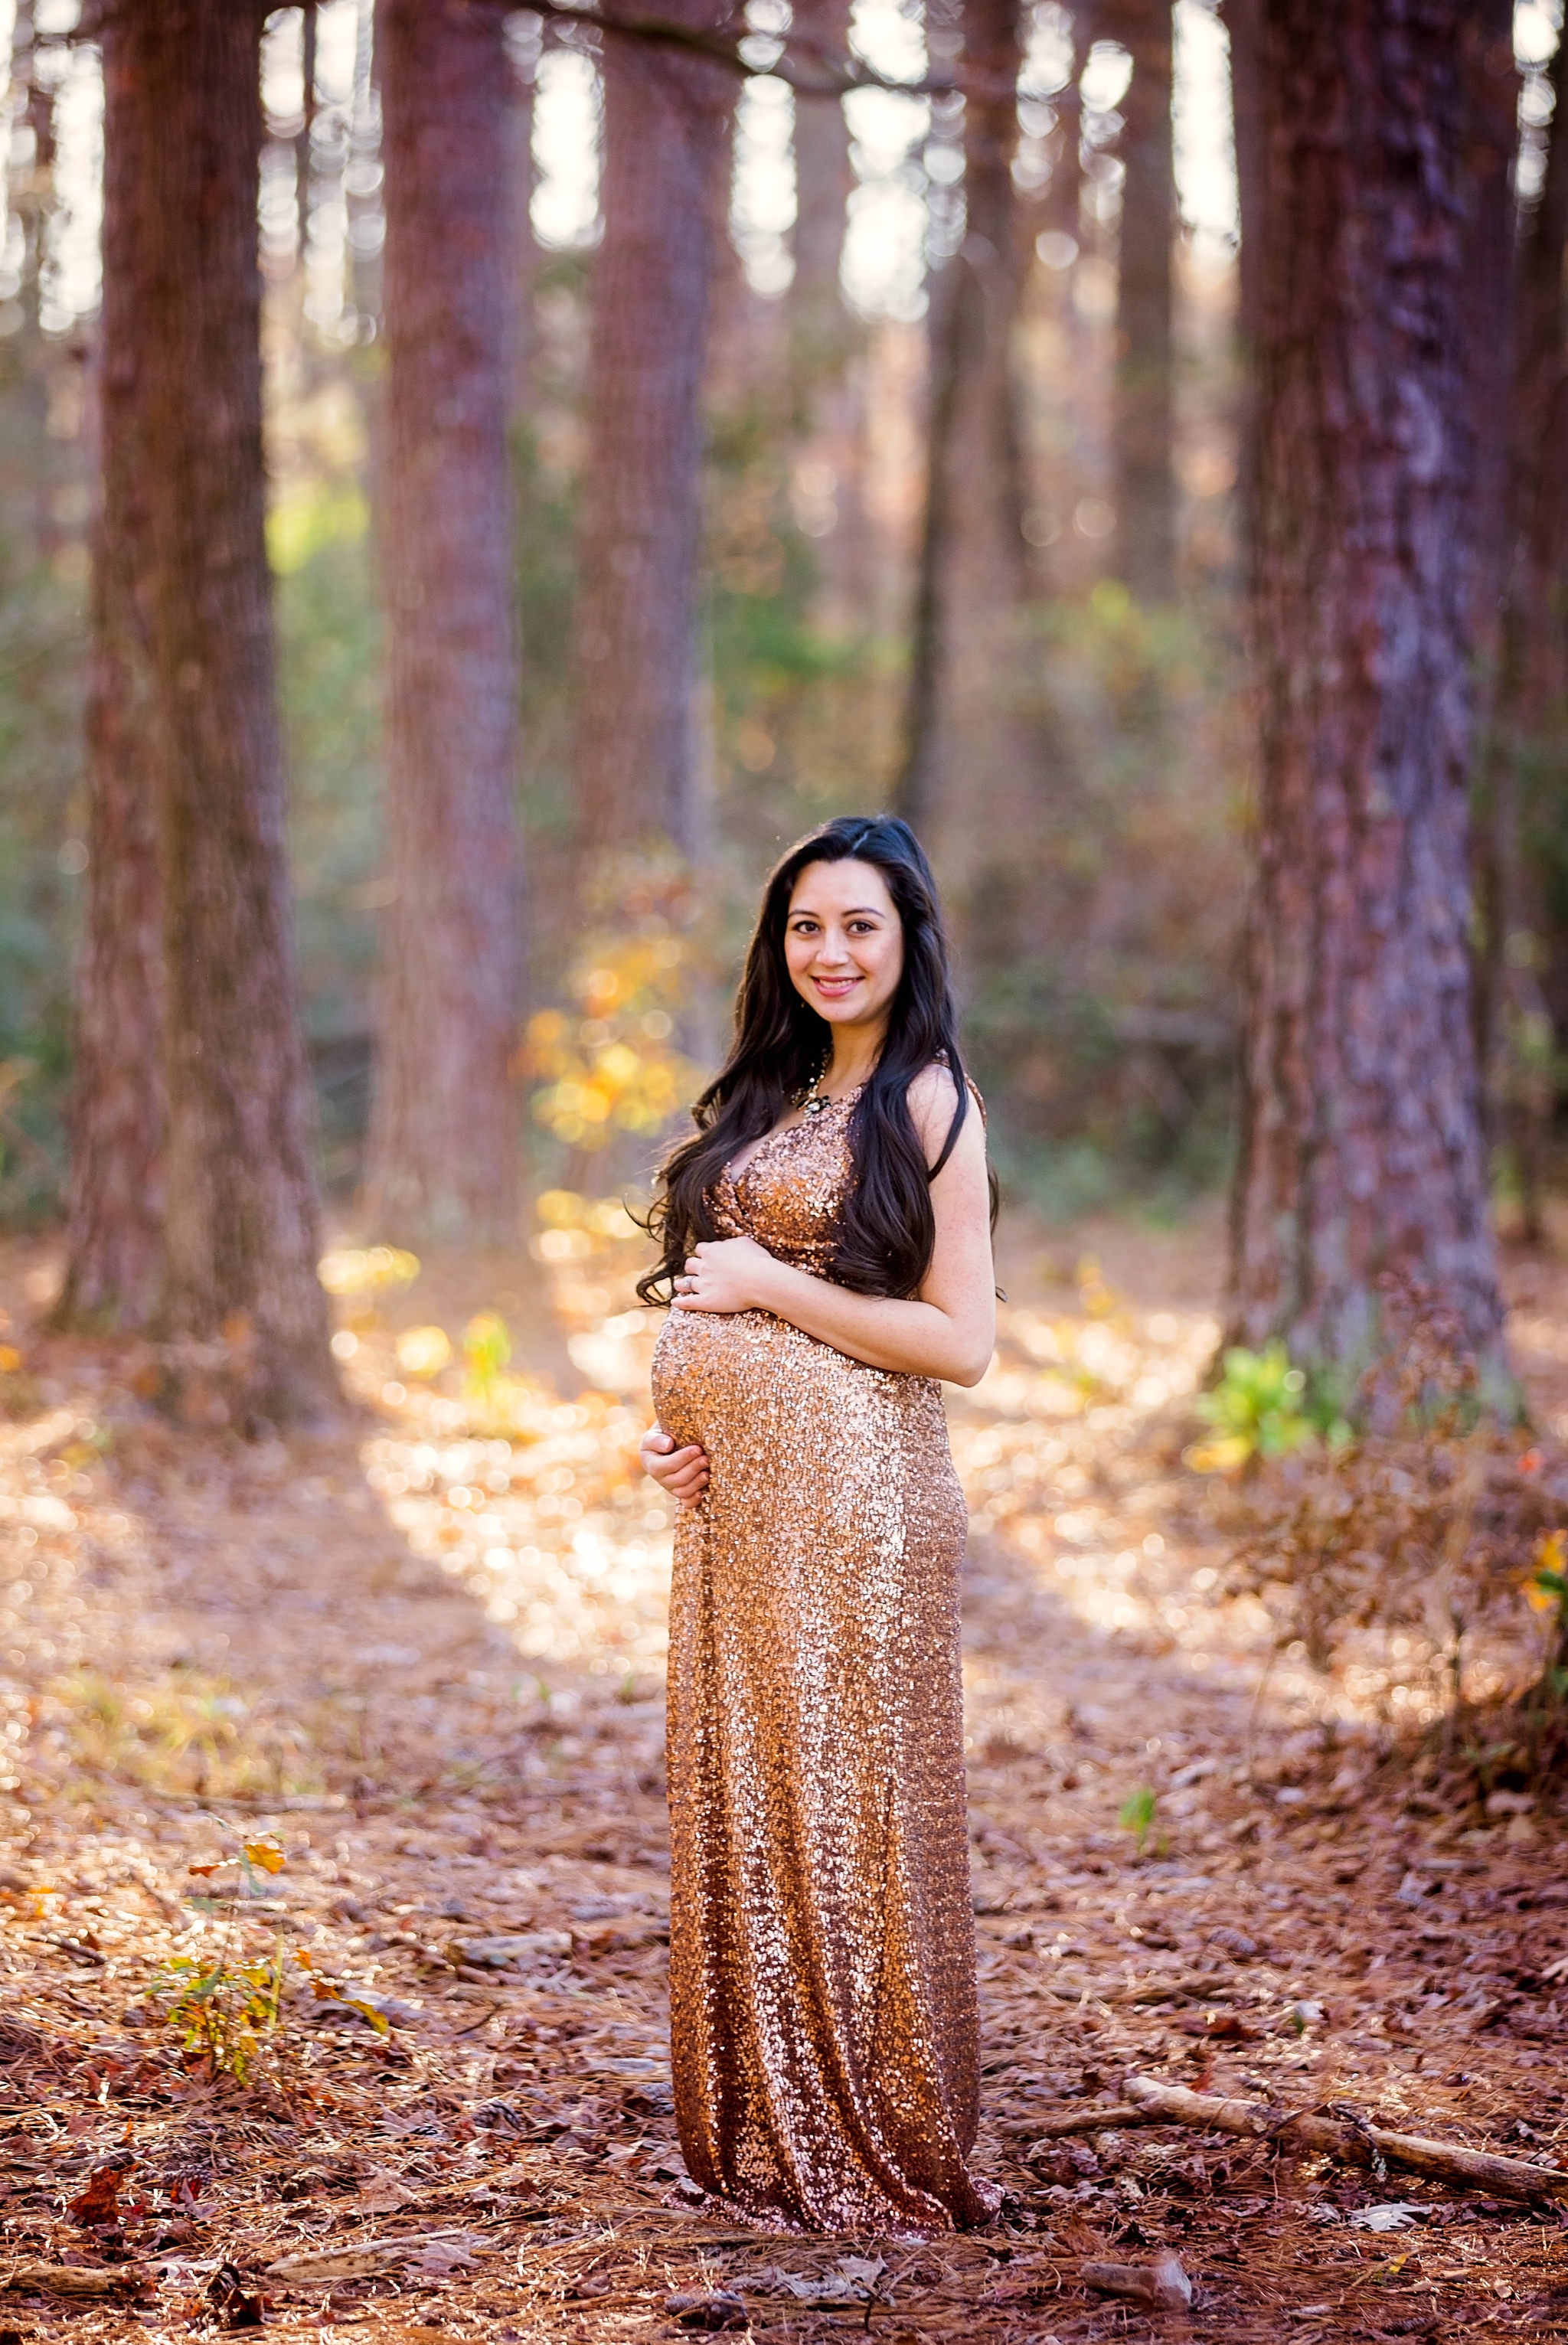 Maternity Session at Clark Park - Fayetteville North Carolina Photographer - Johanna Dye Photography